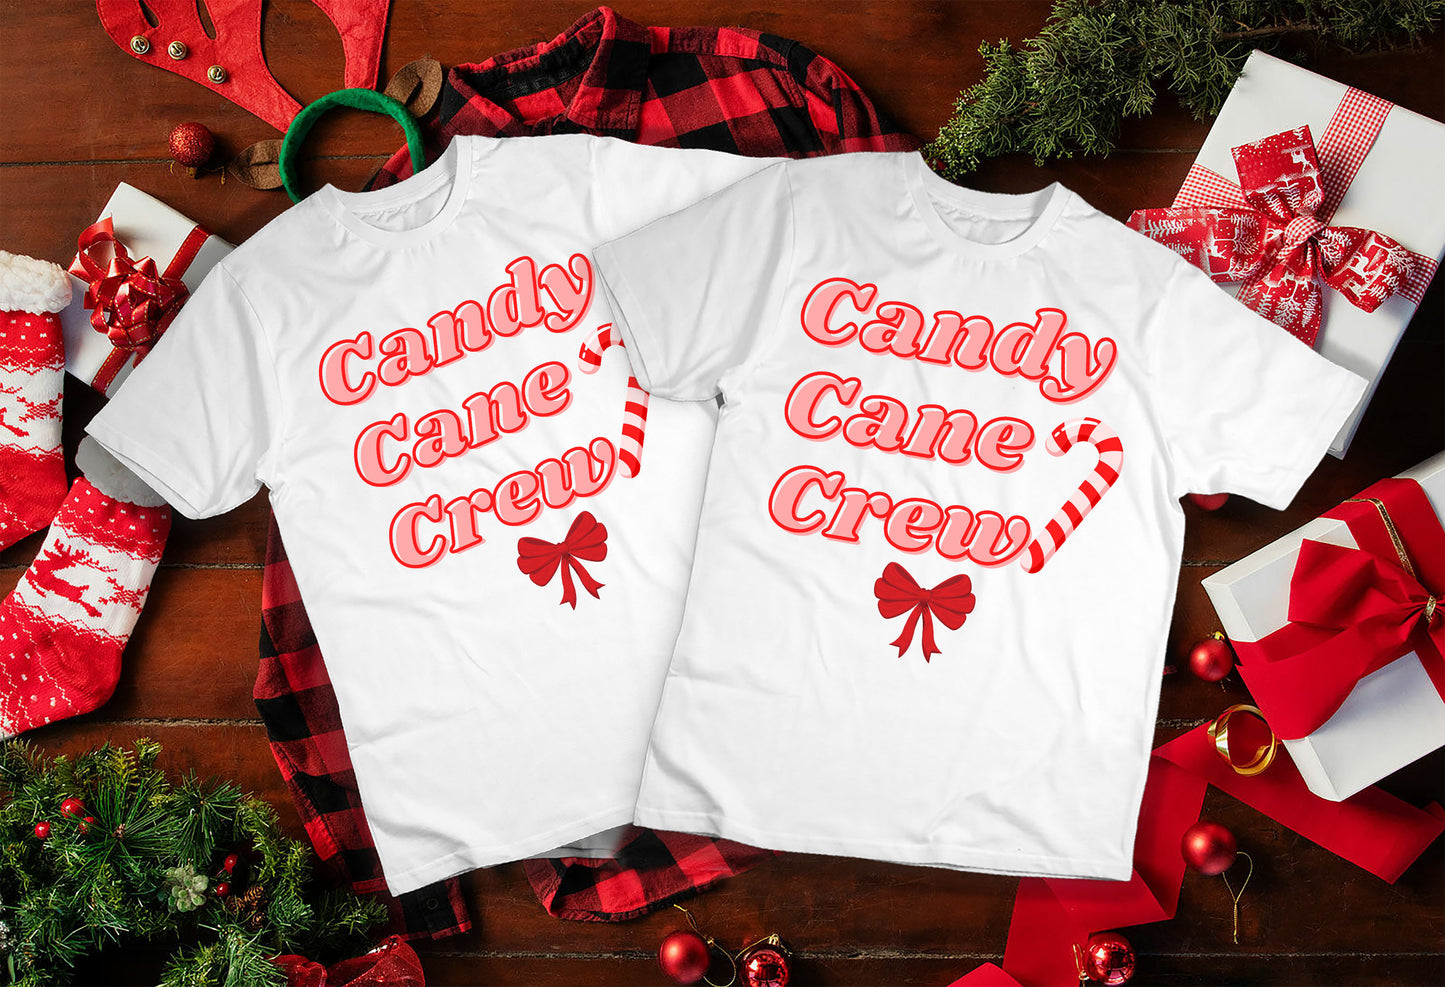 Candy Cane Crew Christmas Shirt